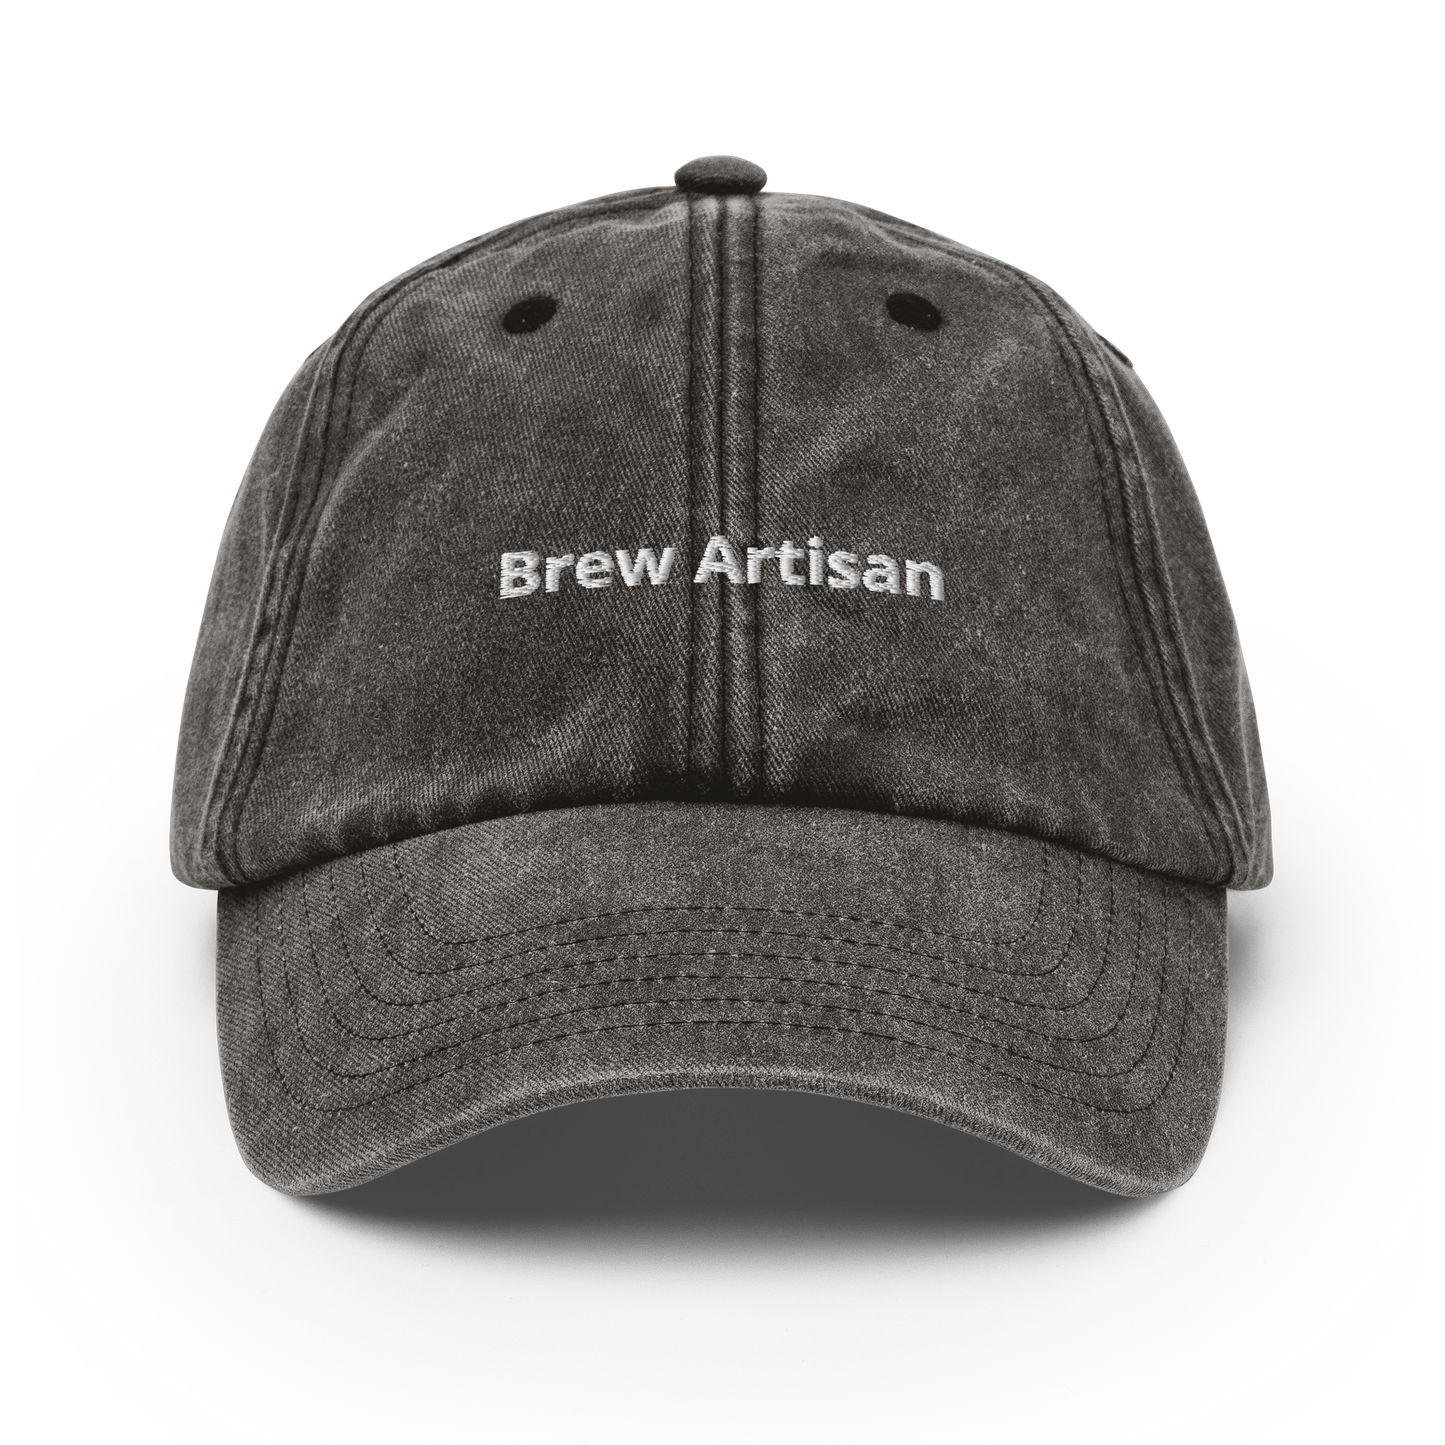 Brew Artisan - Vintage Hat